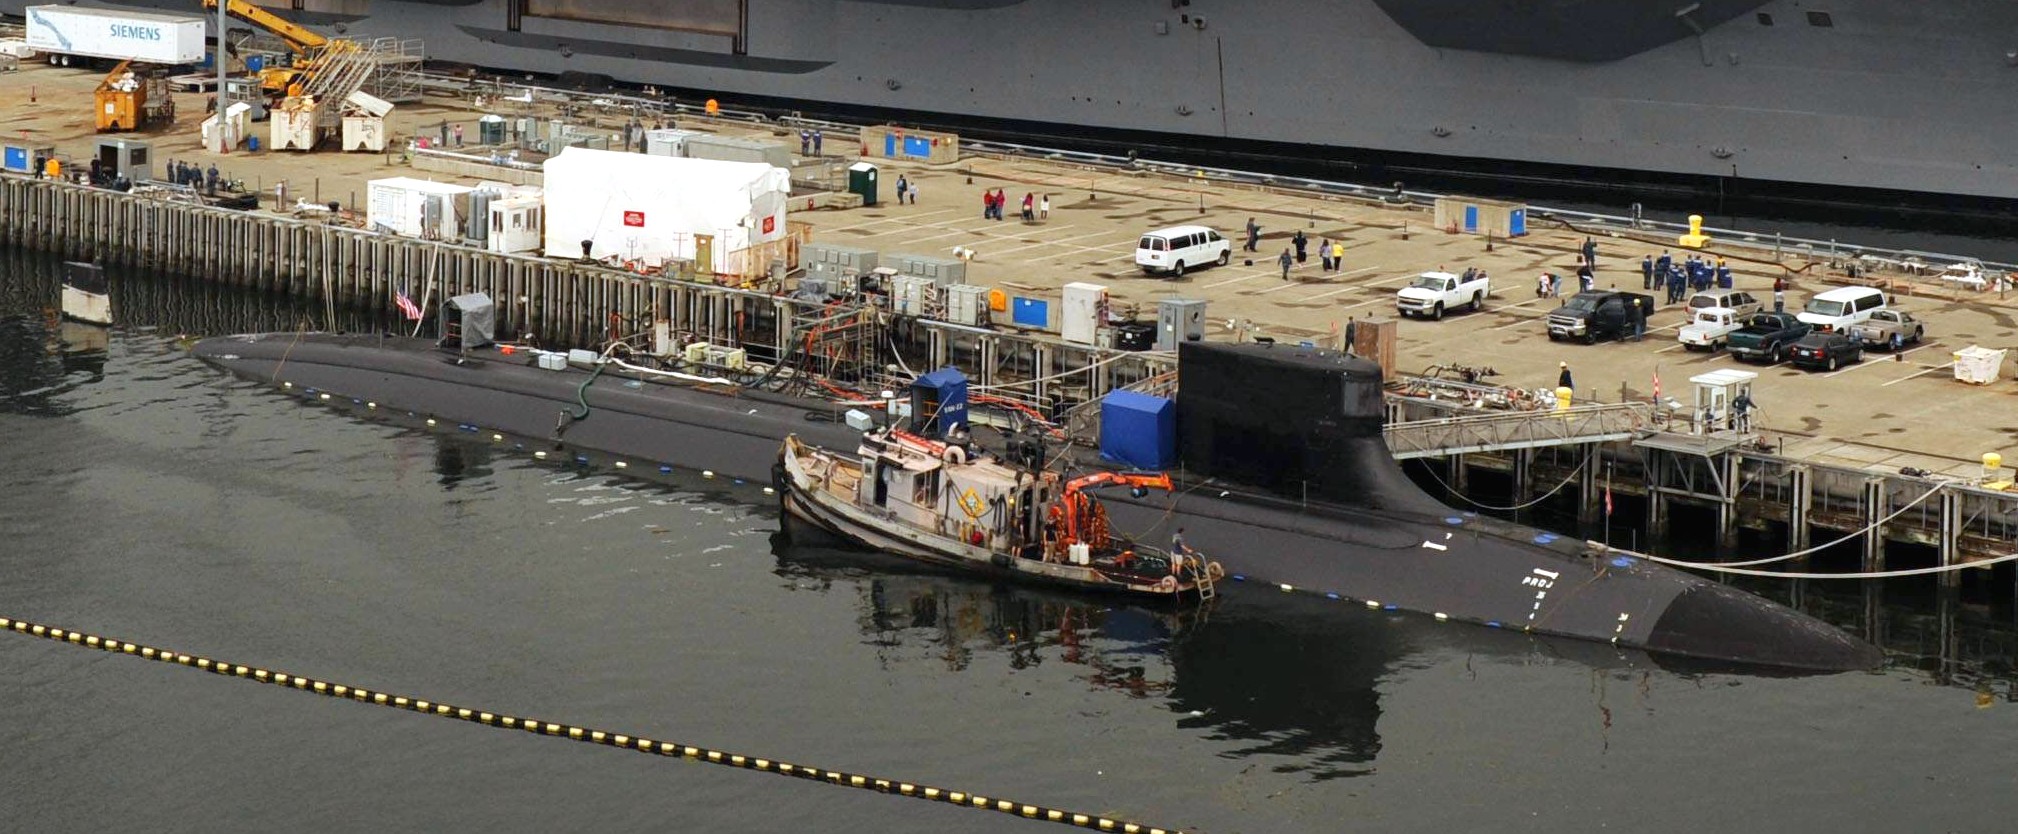 ssn-22 uss connecticut seawolf class attack submarine us navy naval base kitsap bremerton washington 19